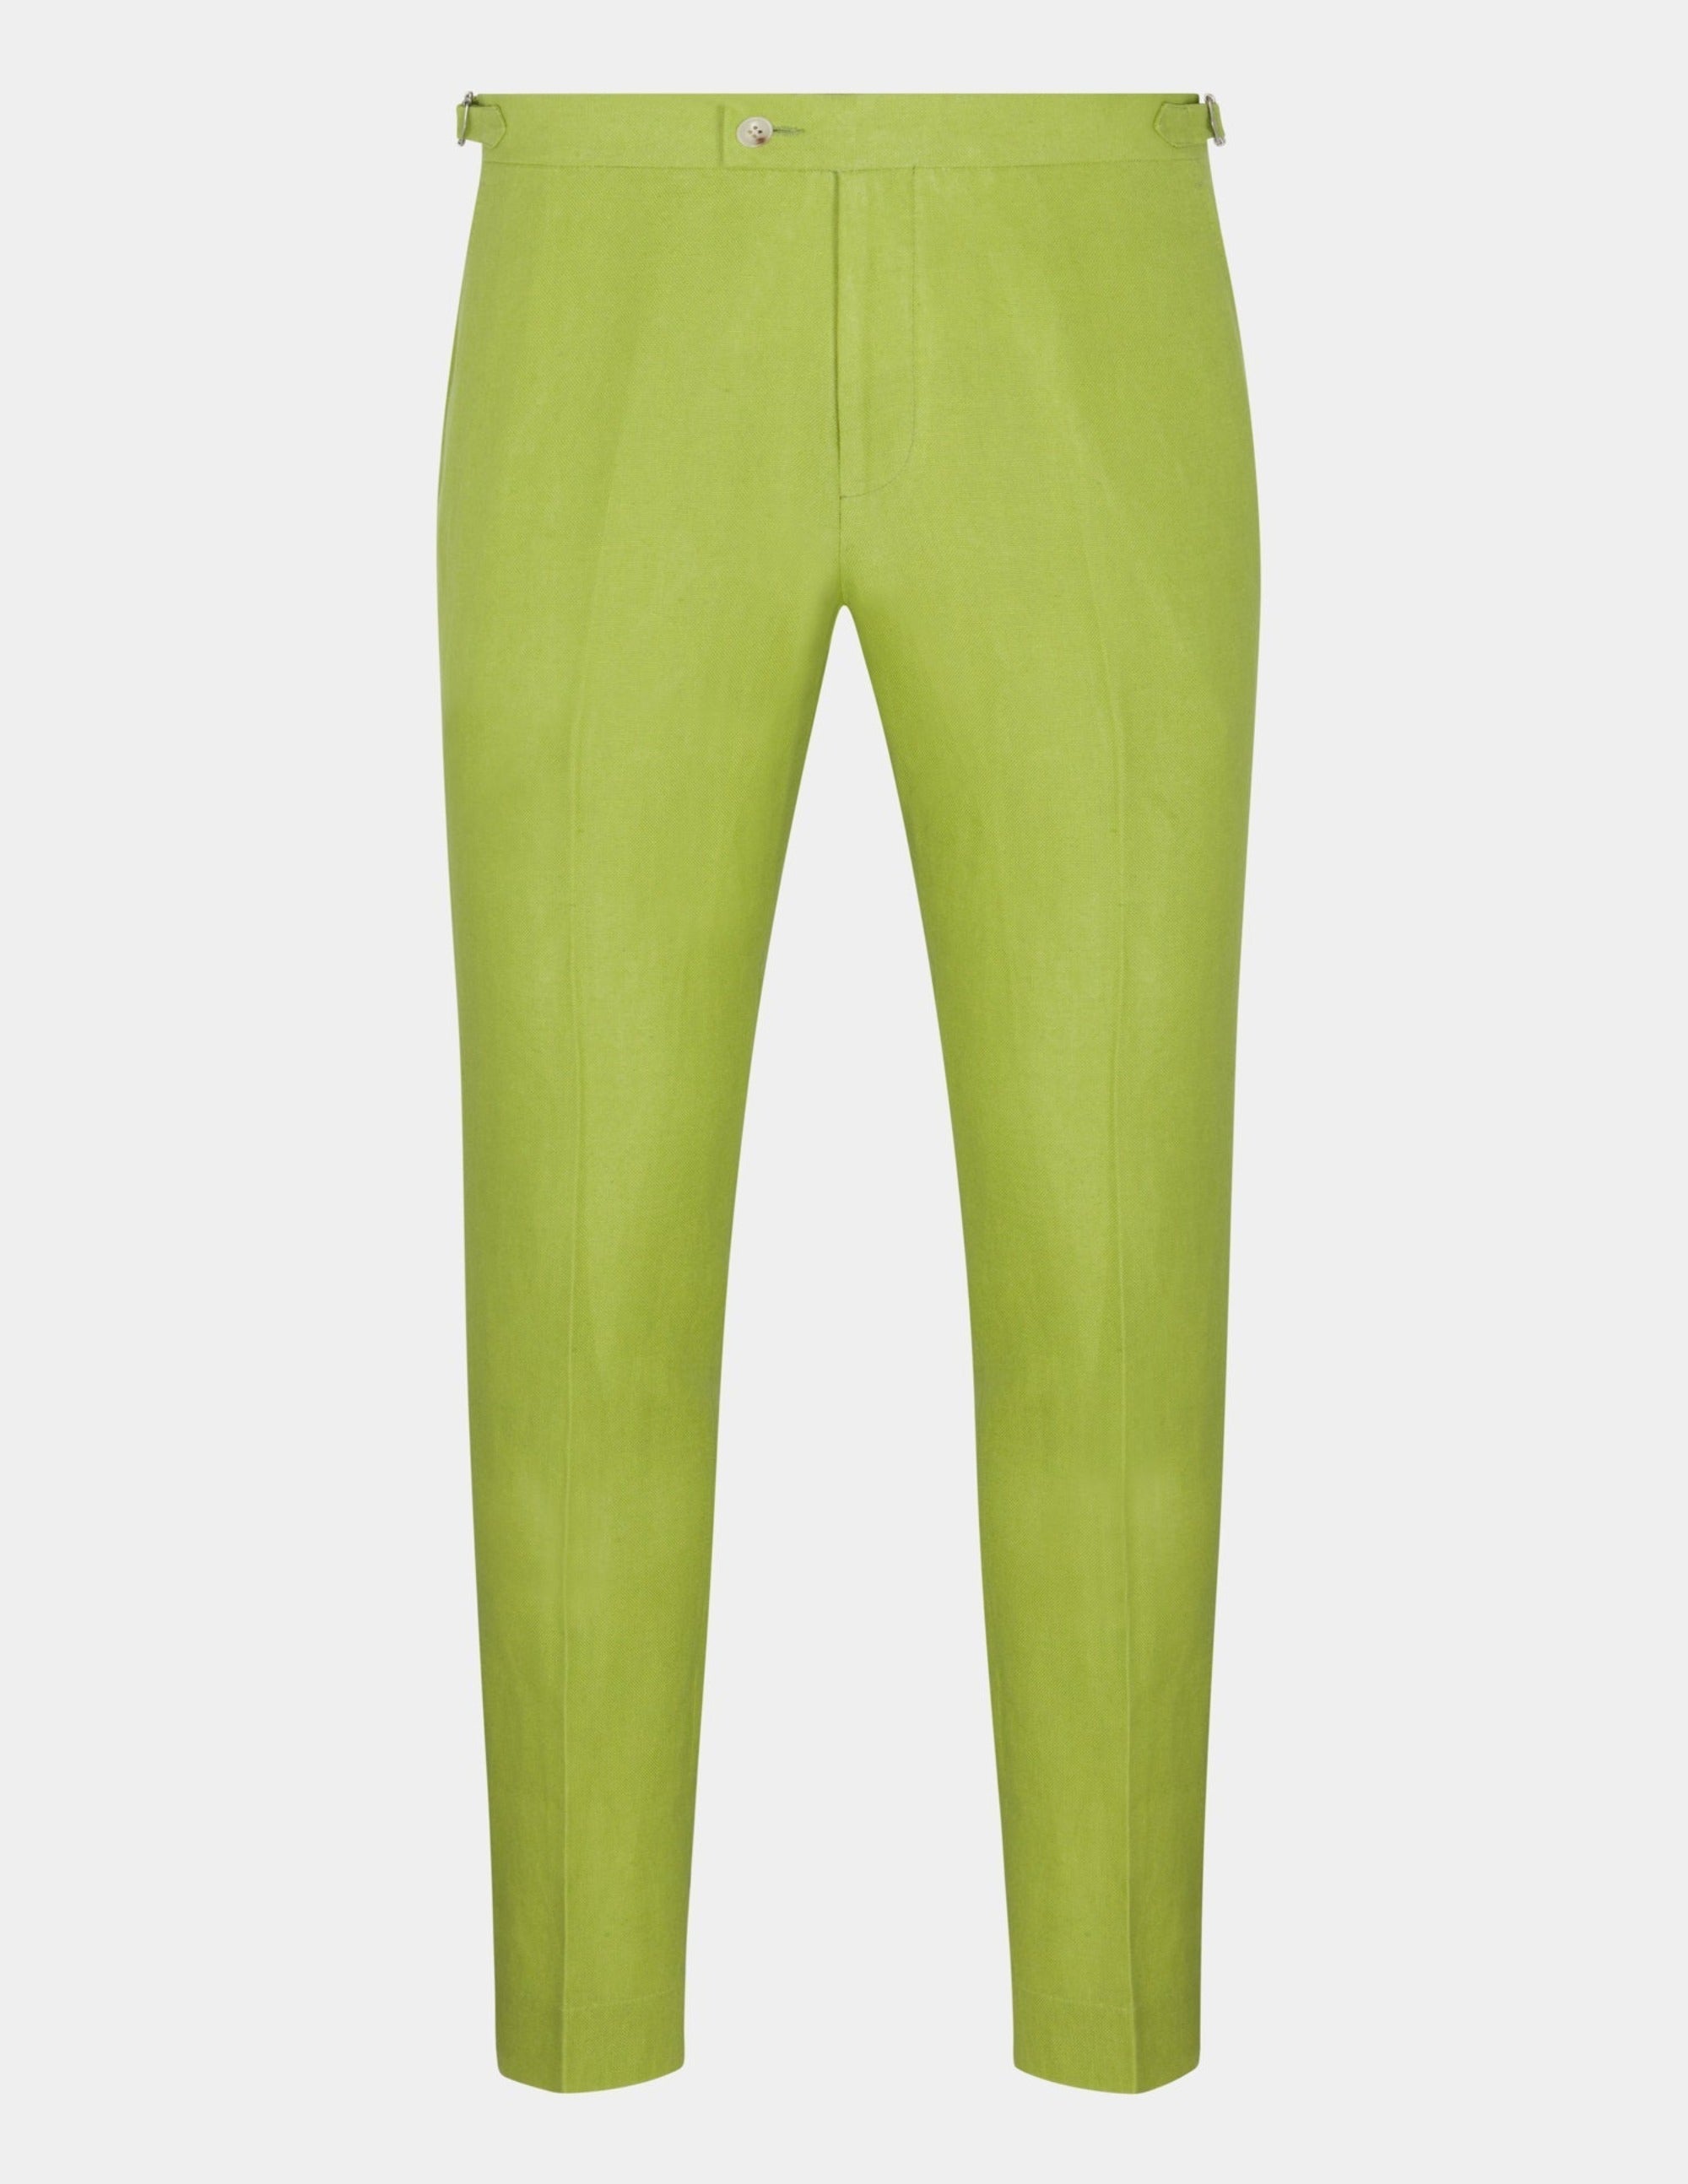 Lime Metallic Trousers